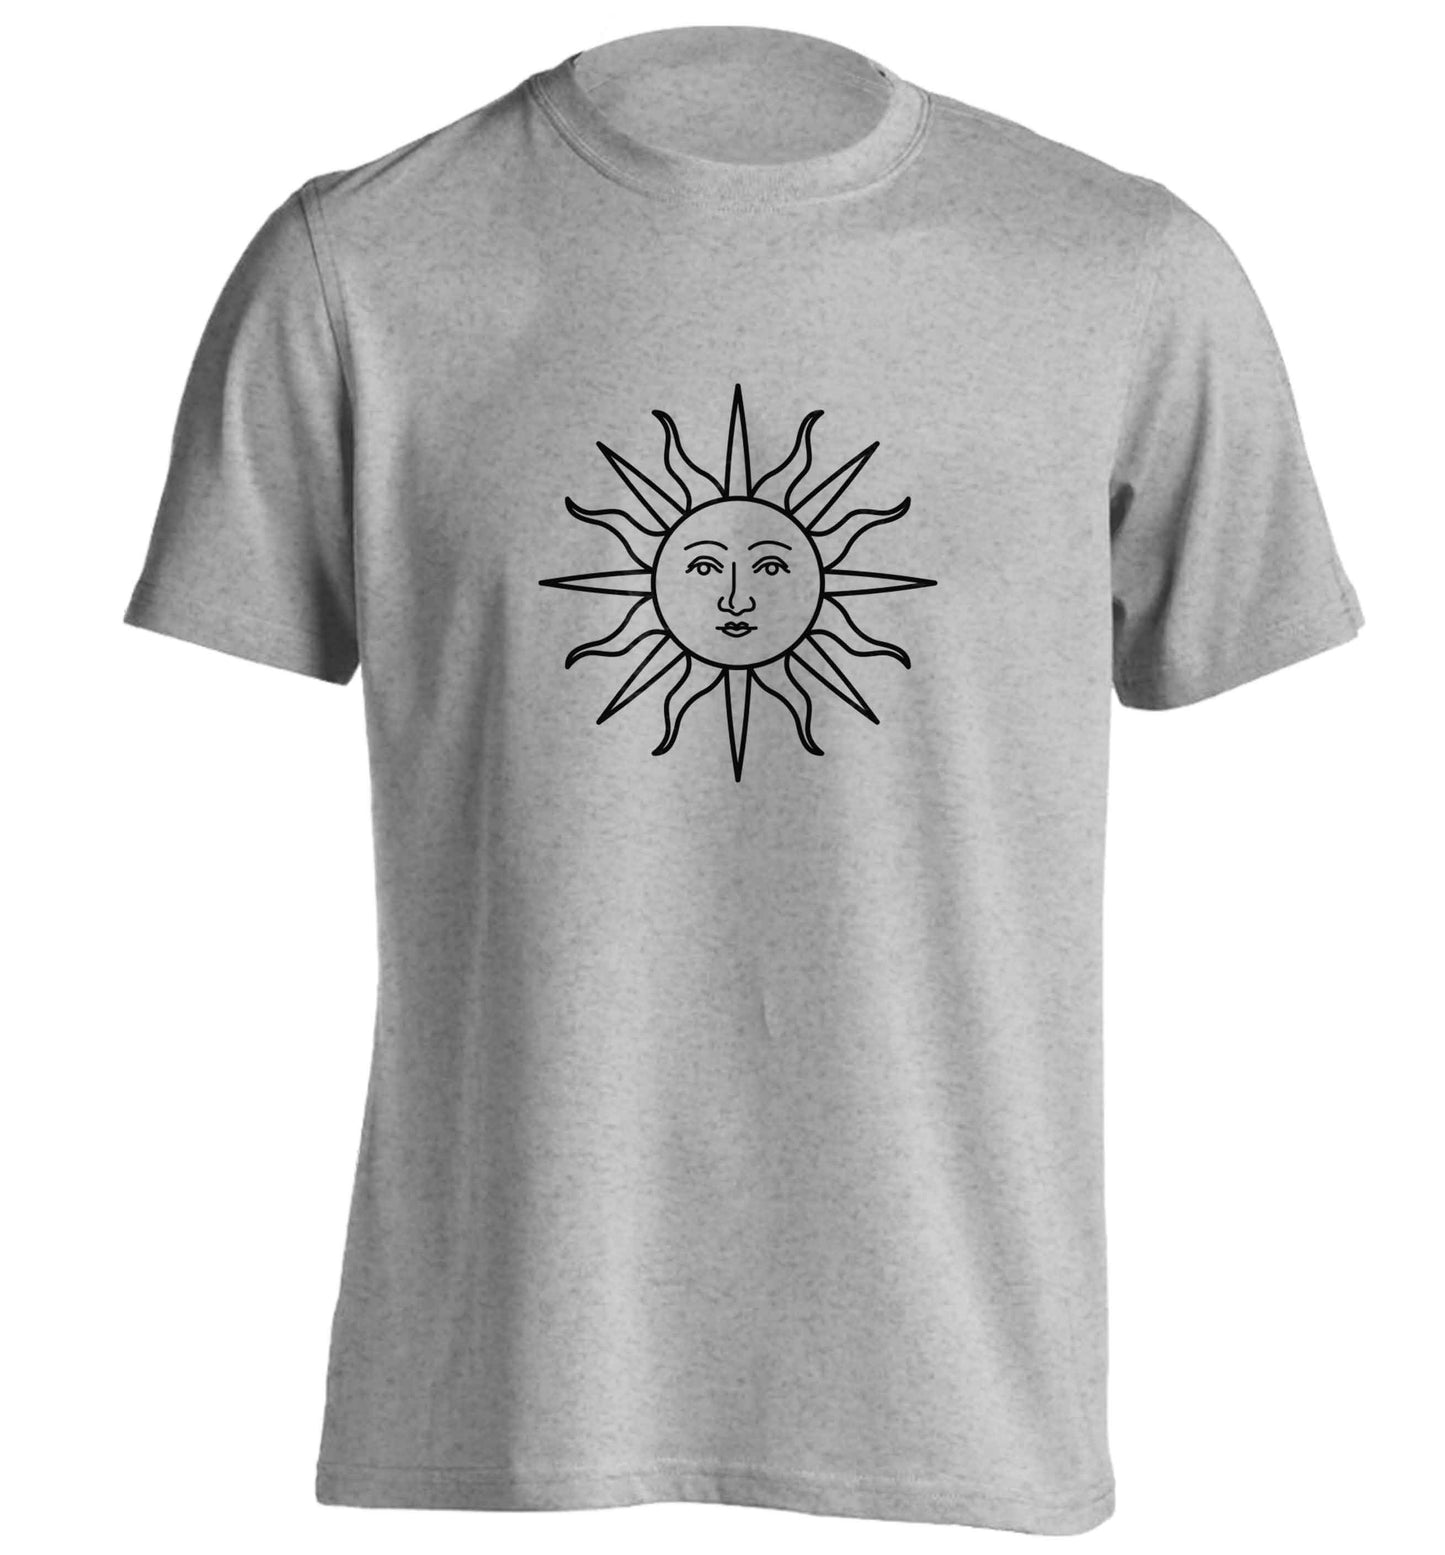 Sun face illustration adults unisex grey Tshirt 2XL